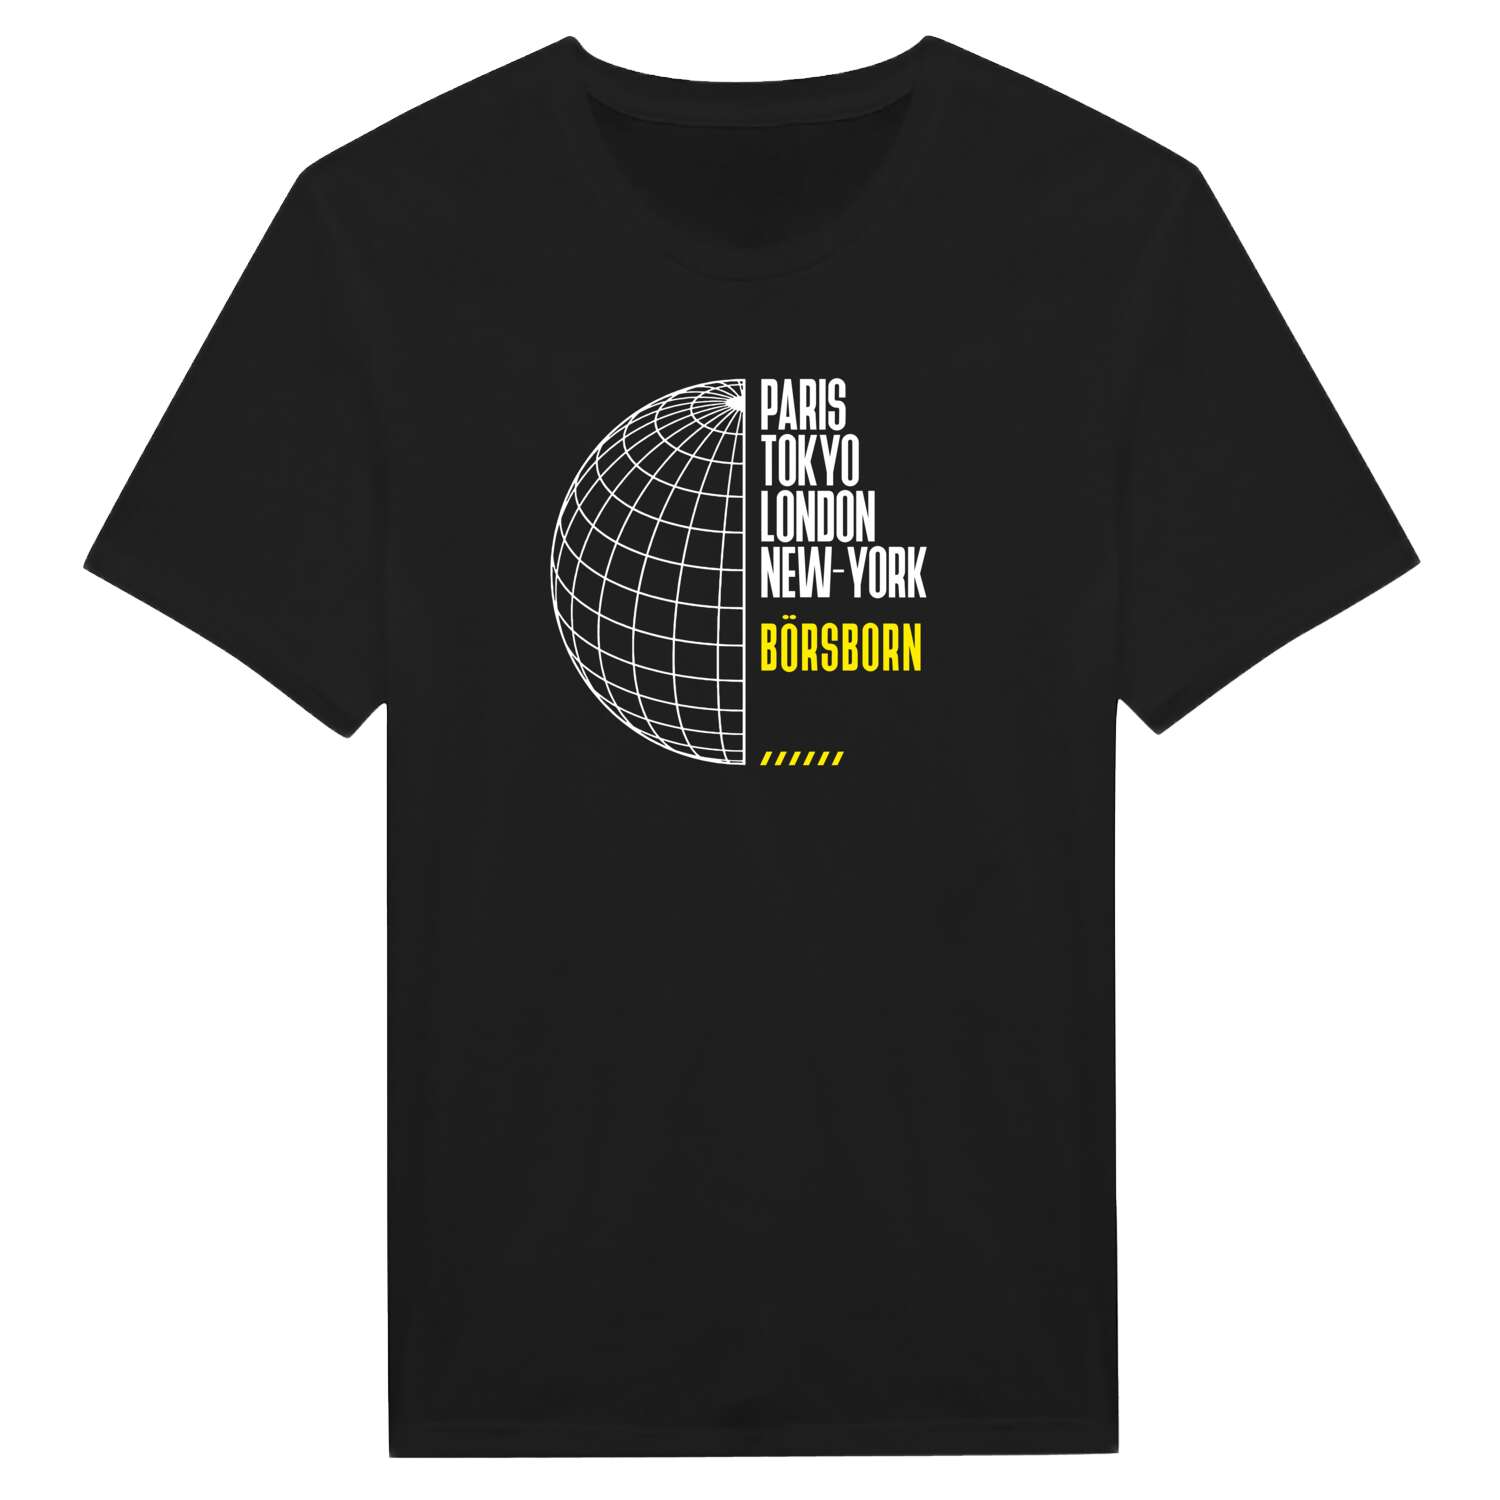 Börsborn T-Shirt »Paris Tokyo London«